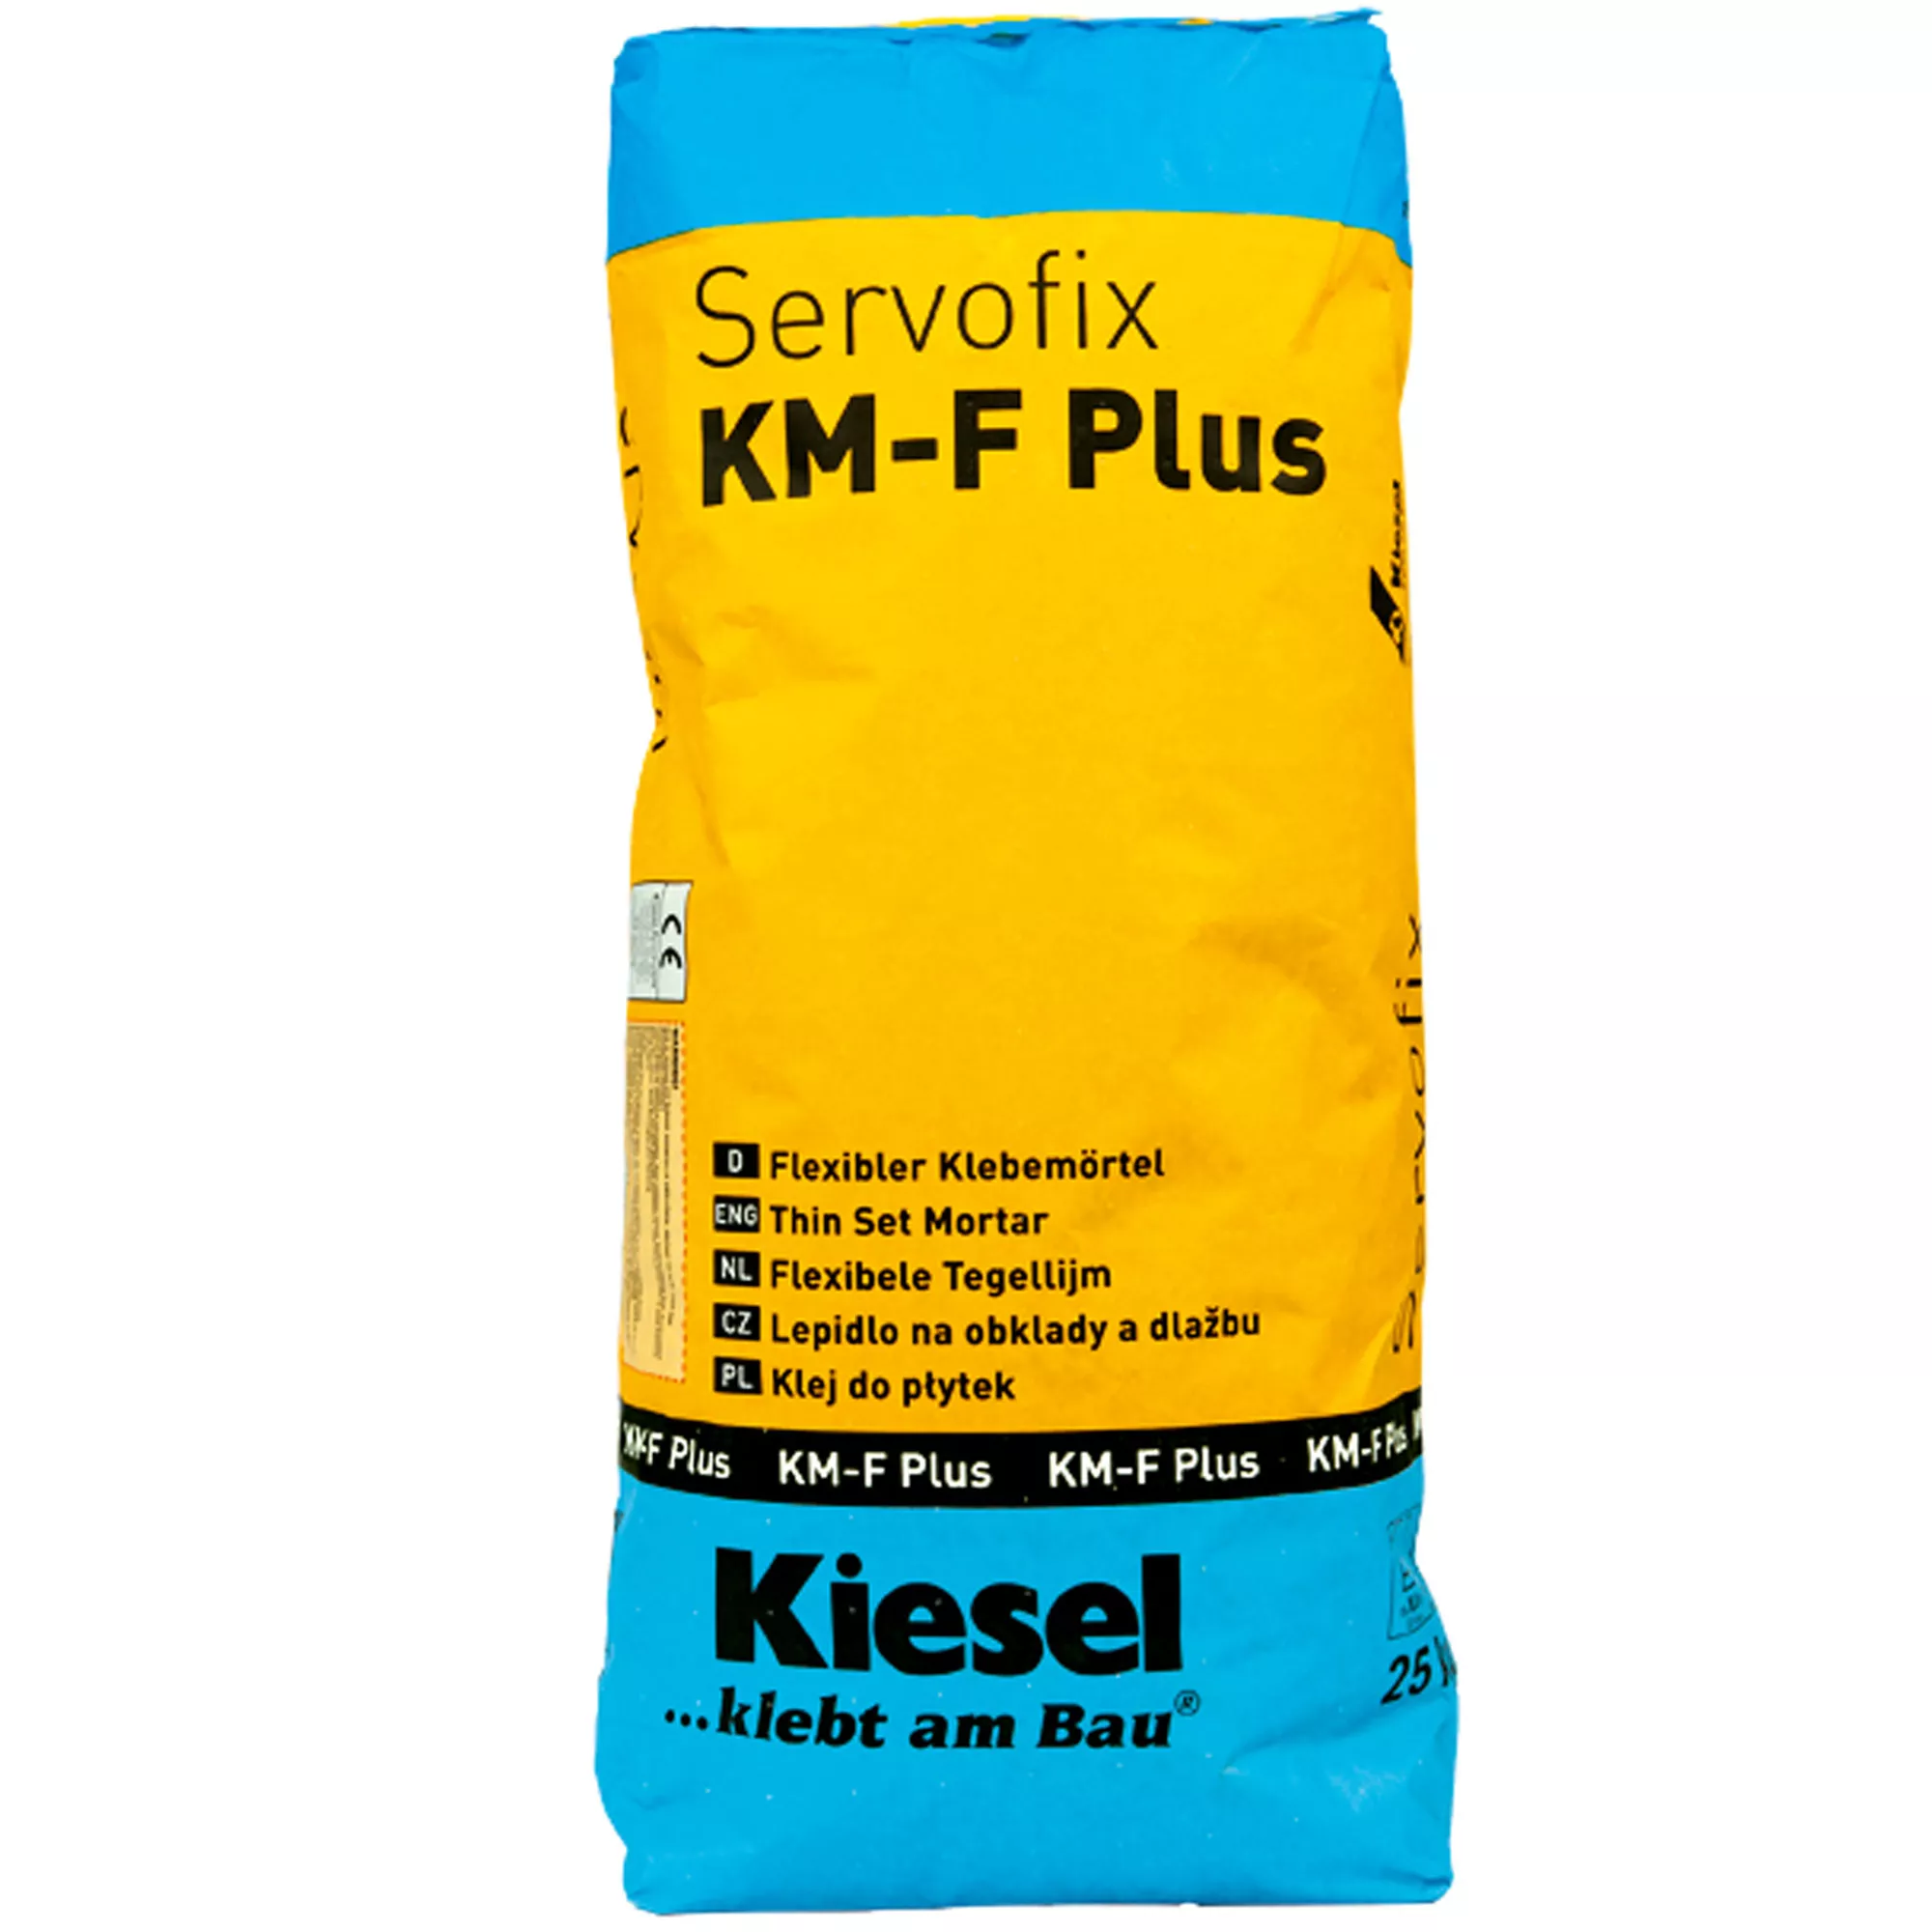 Adeziv pentru faianță Kiesel Servofix KM-F Plus - mortar adeziv flexibil 25 kg